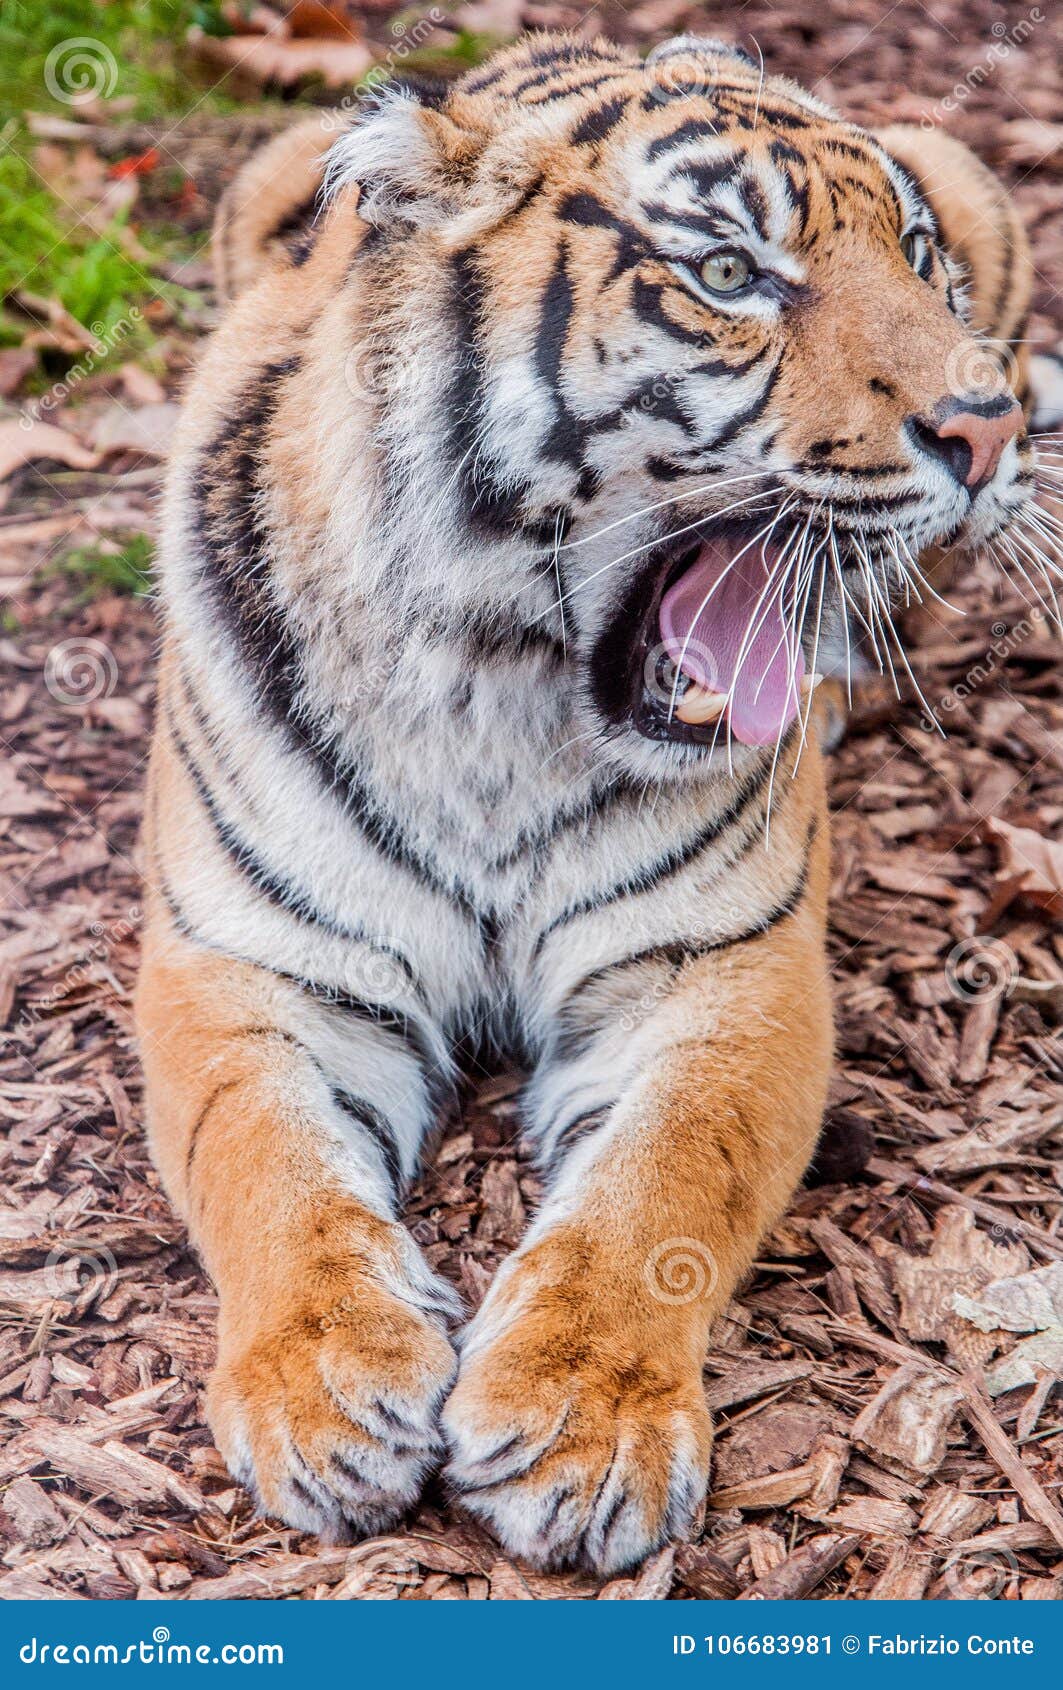 Tiger Roar Bengal Tiger Queen Of Forest Tiger Close Up Feline Stock Image Image Of Nice Stripes